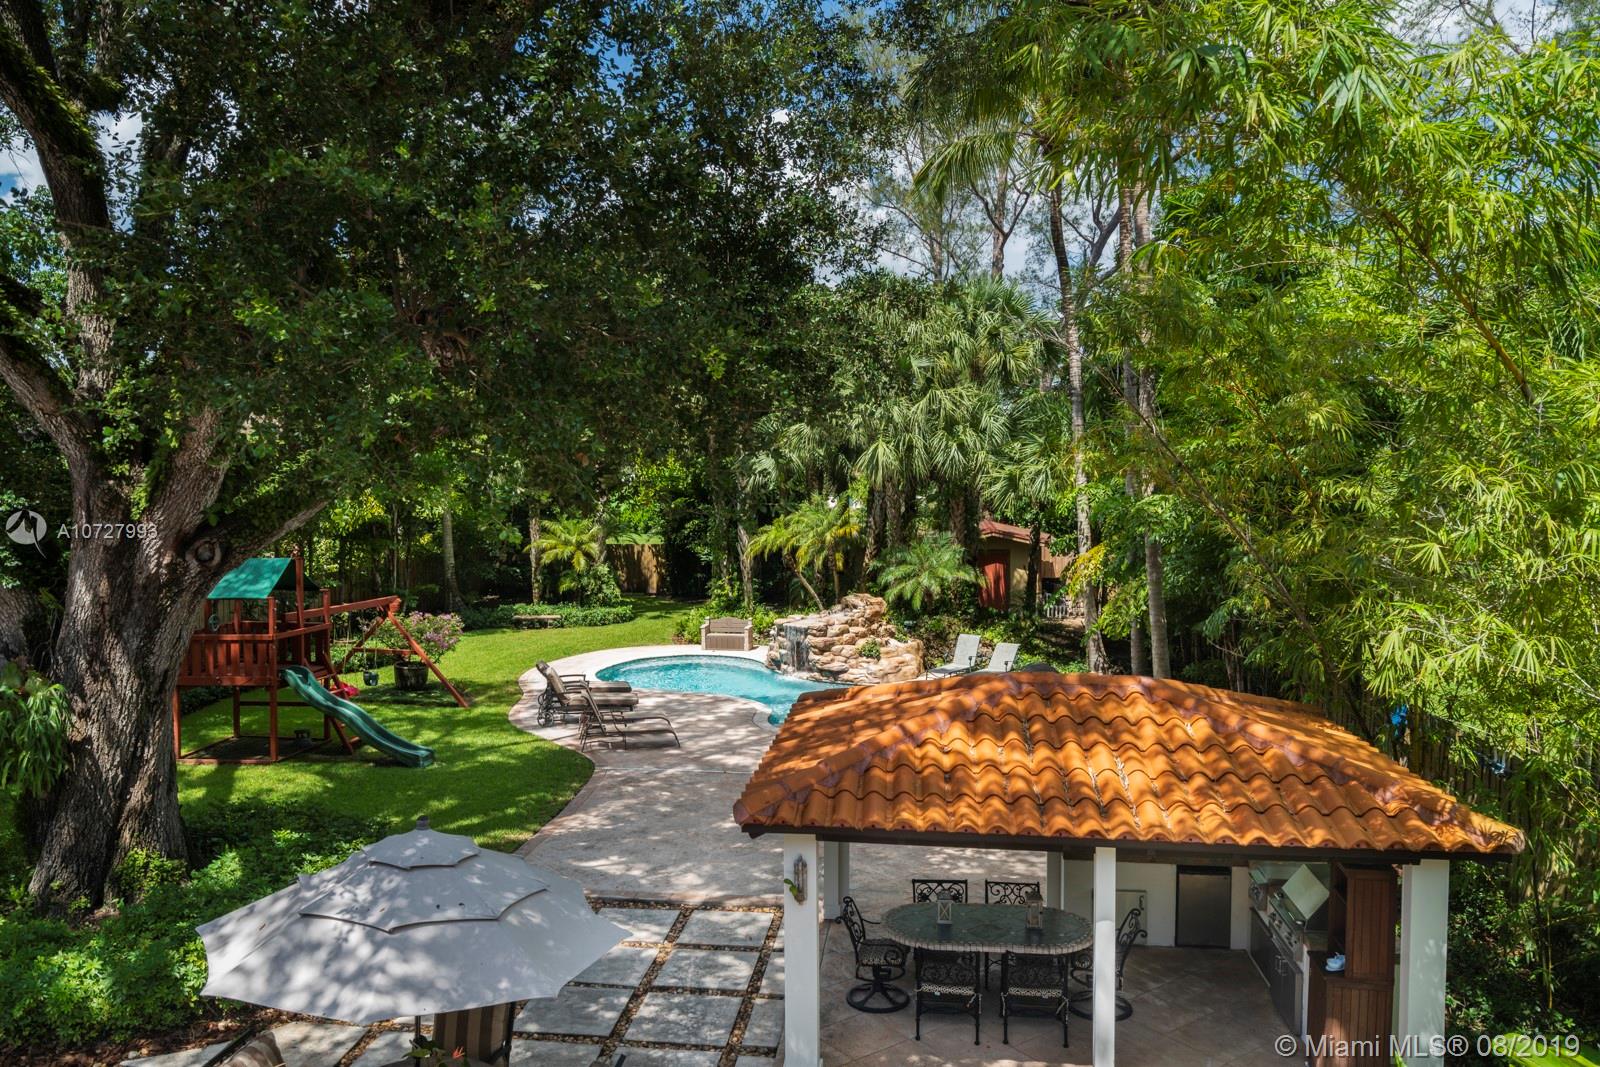 Enjoy this lush, tropical, serene backyard engulfed with a beautiful mature Oak tree.